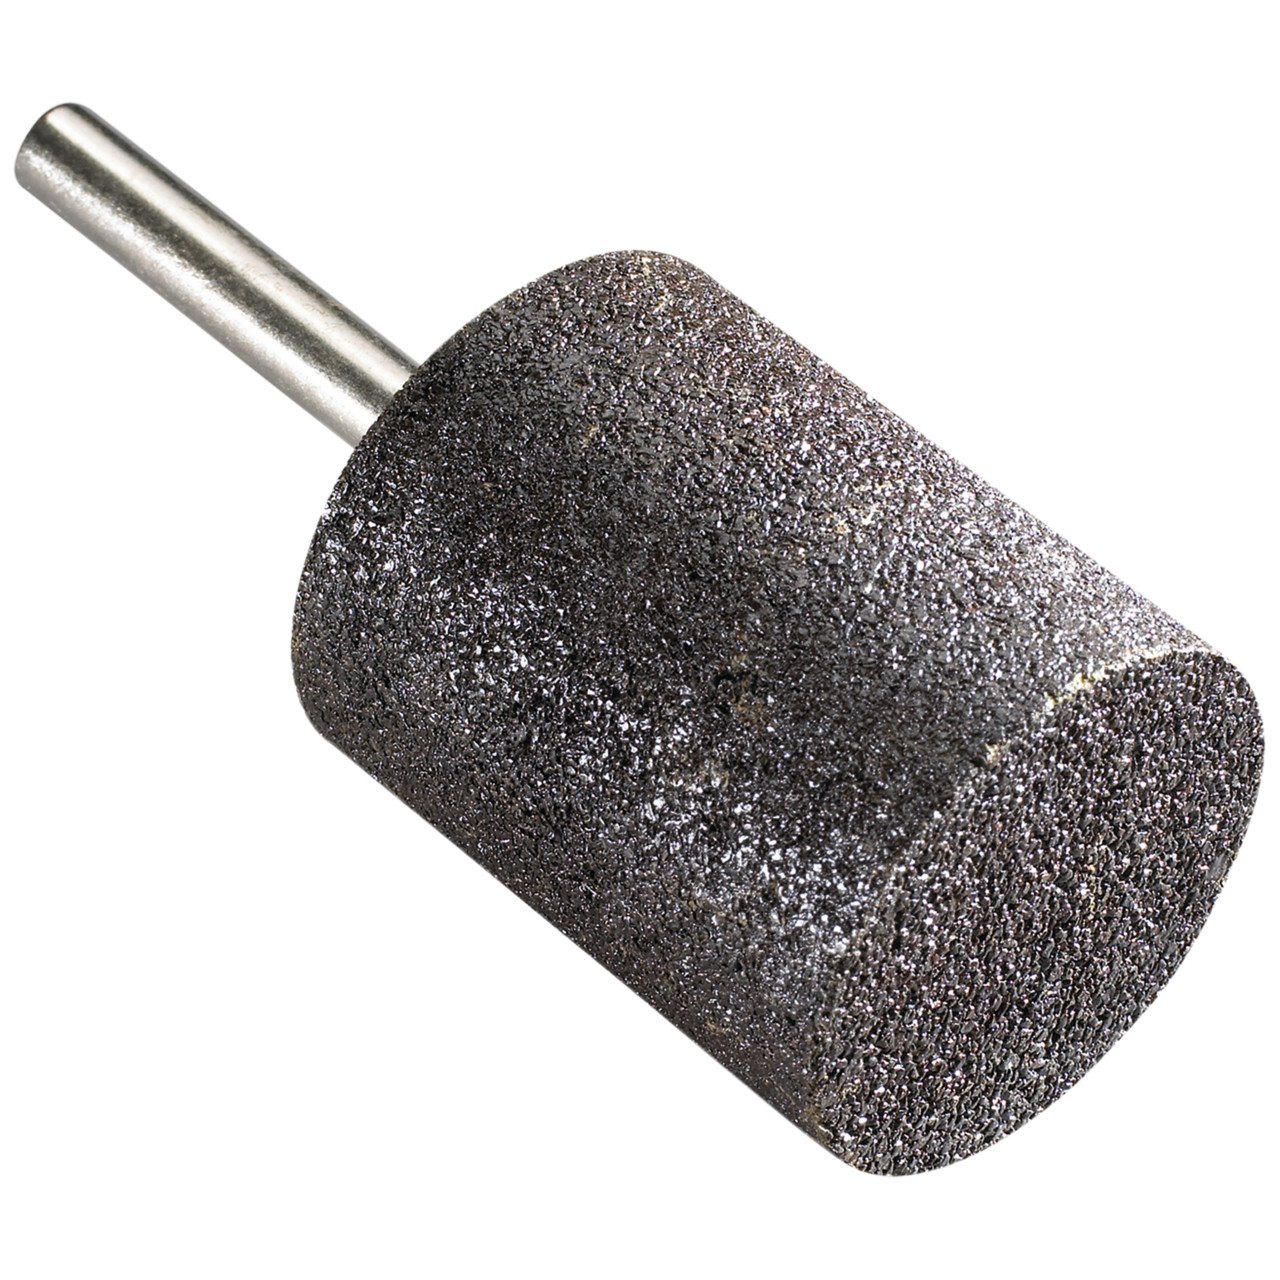 Tyrolit Punti montati in resina DxT-SxL 40x13-6x40 Per ghisa, forma: 52W - cilindro (punto montato), Art. 21239